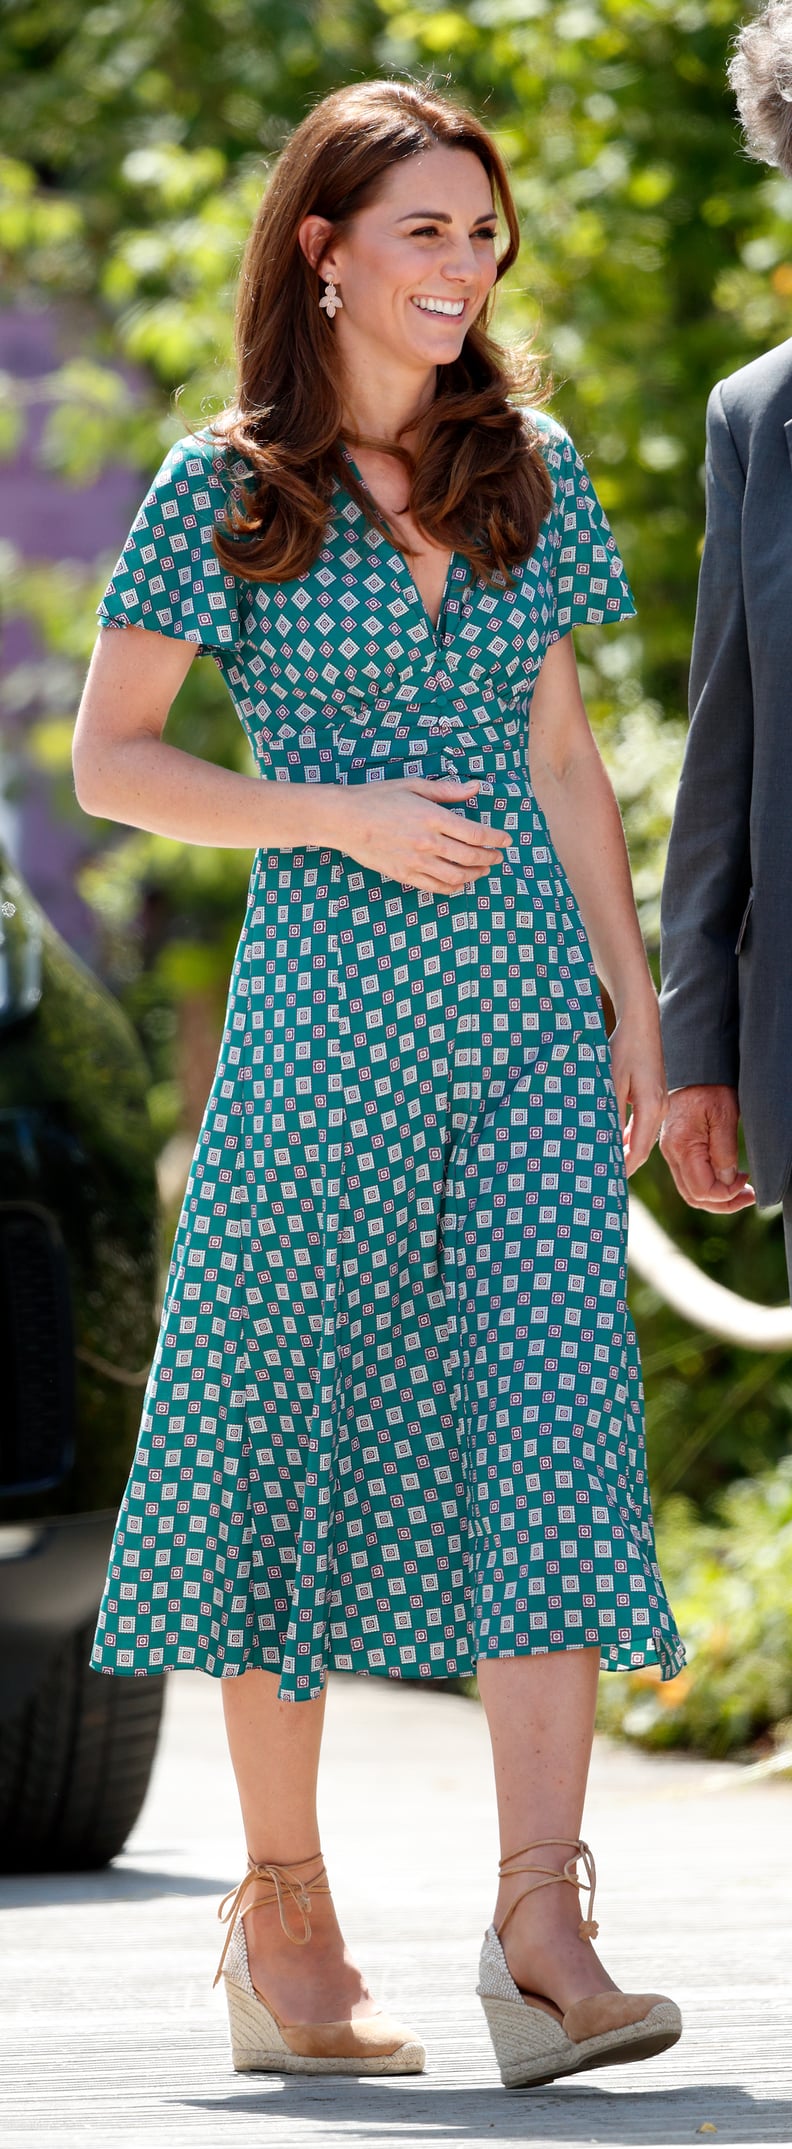 Kate Middleton's Sandro Paris Dress at Hampton Court Palace, July 2019